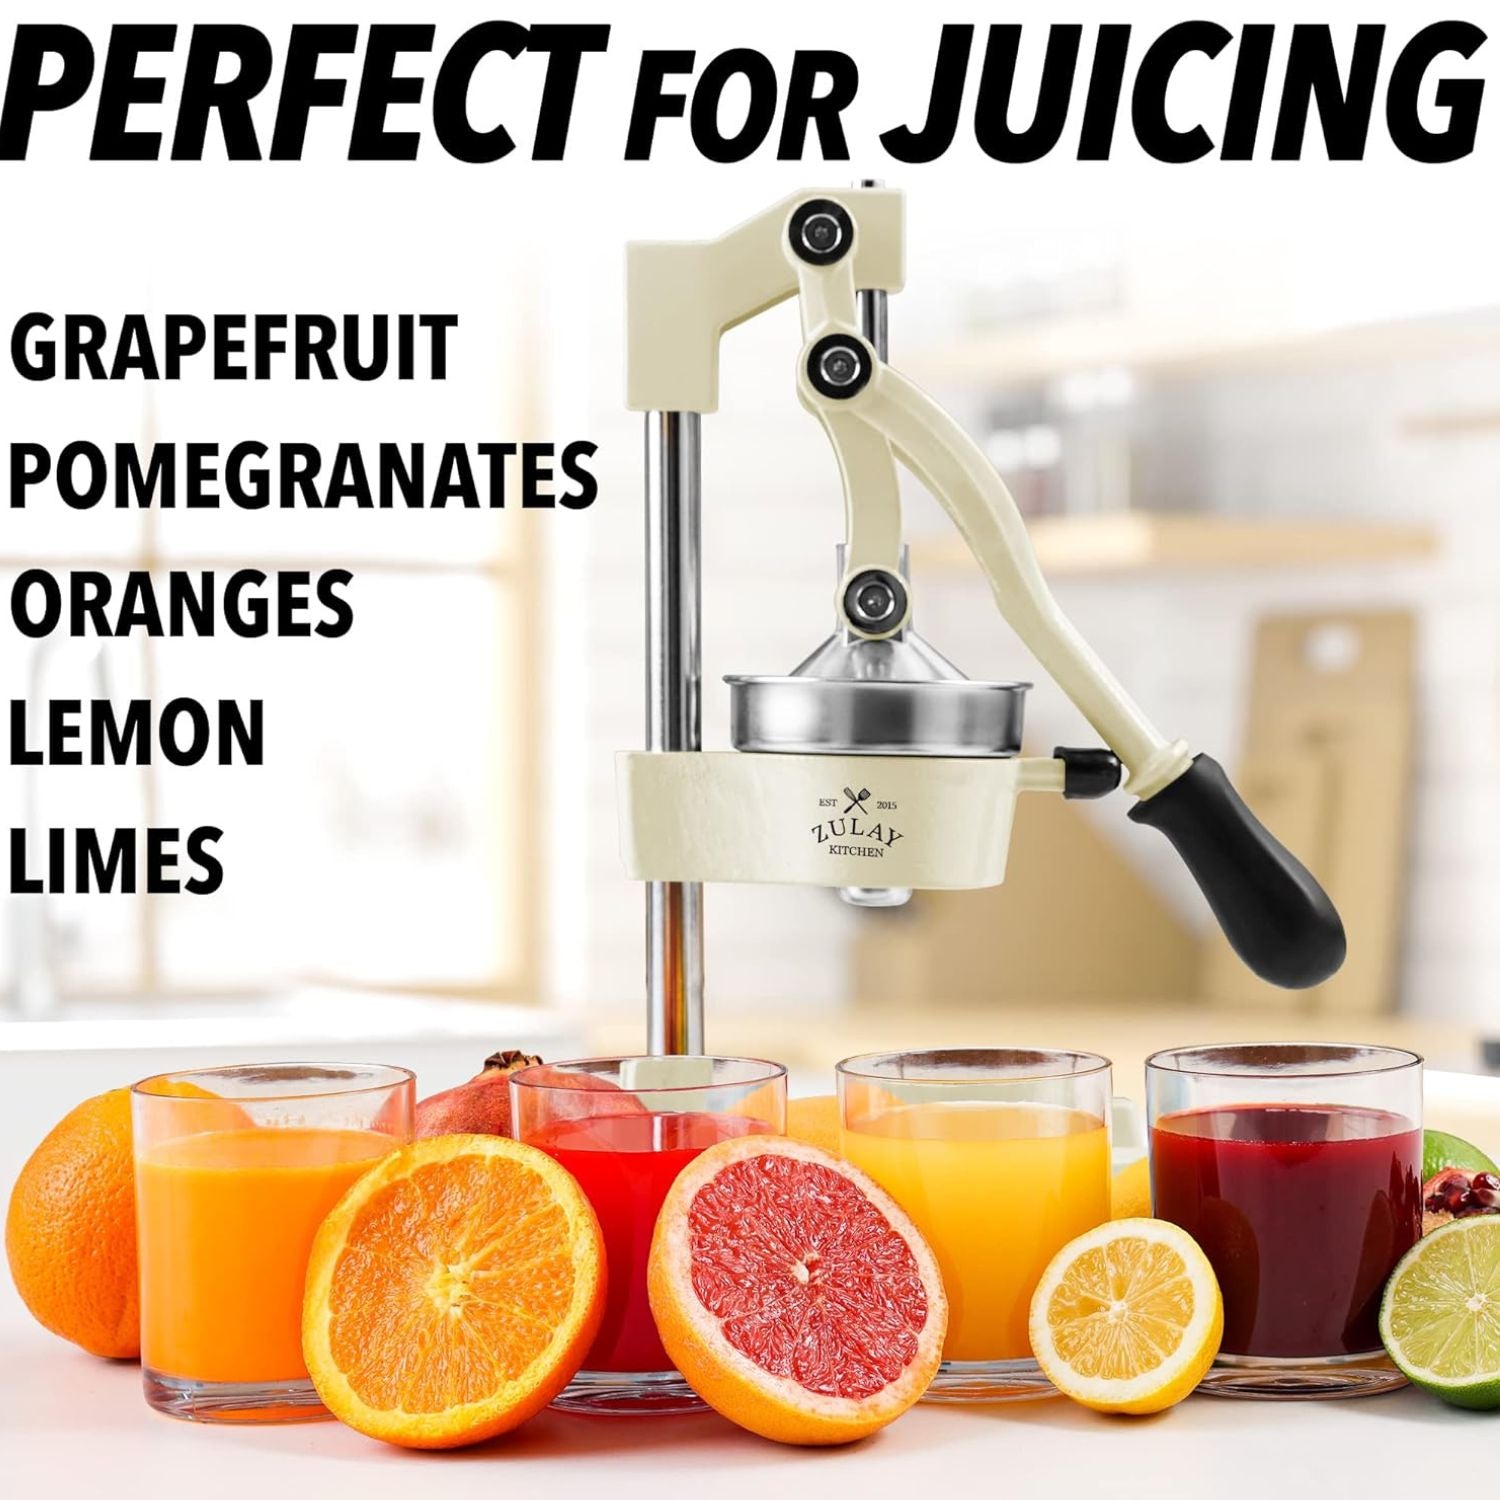 Zulay Kitchen Professional Citrus Juicer Manual Citrus Press and Orange  Squeezer - Black